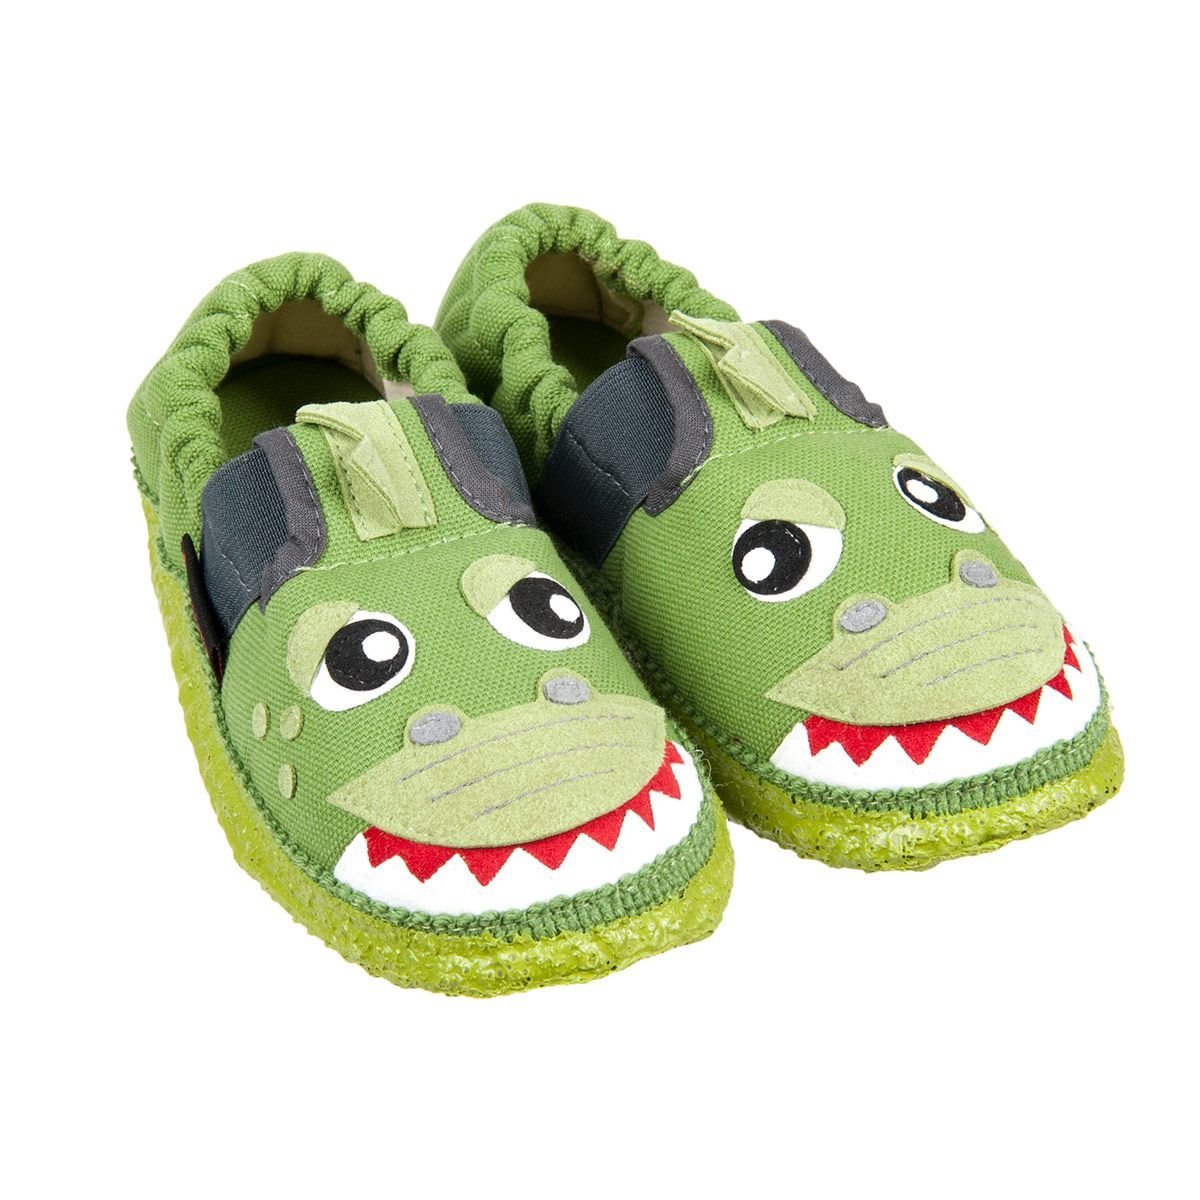 Giesswein kids slippers